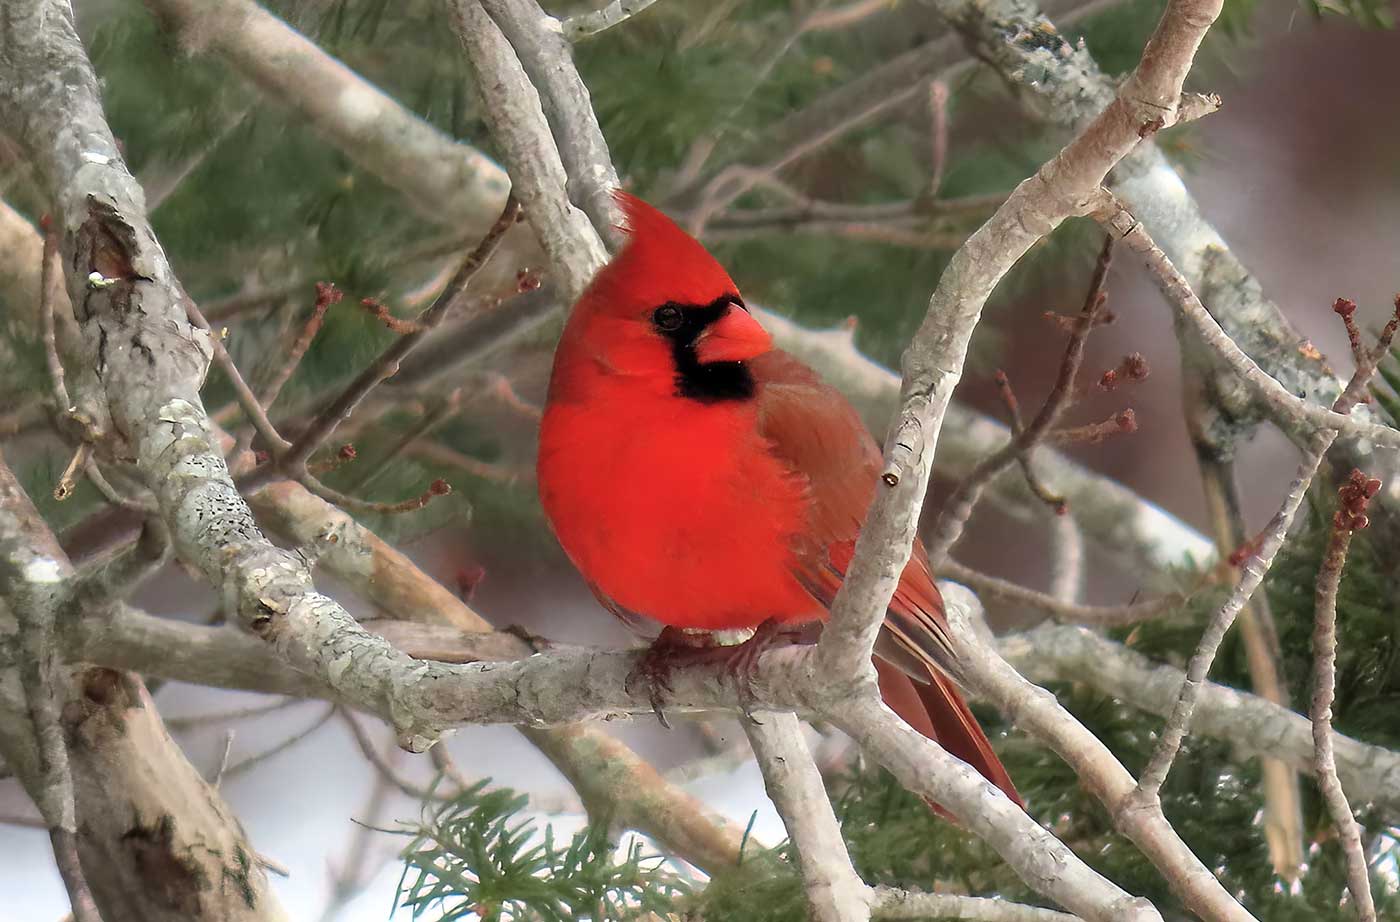 Northern Cardinal male sitting in tree